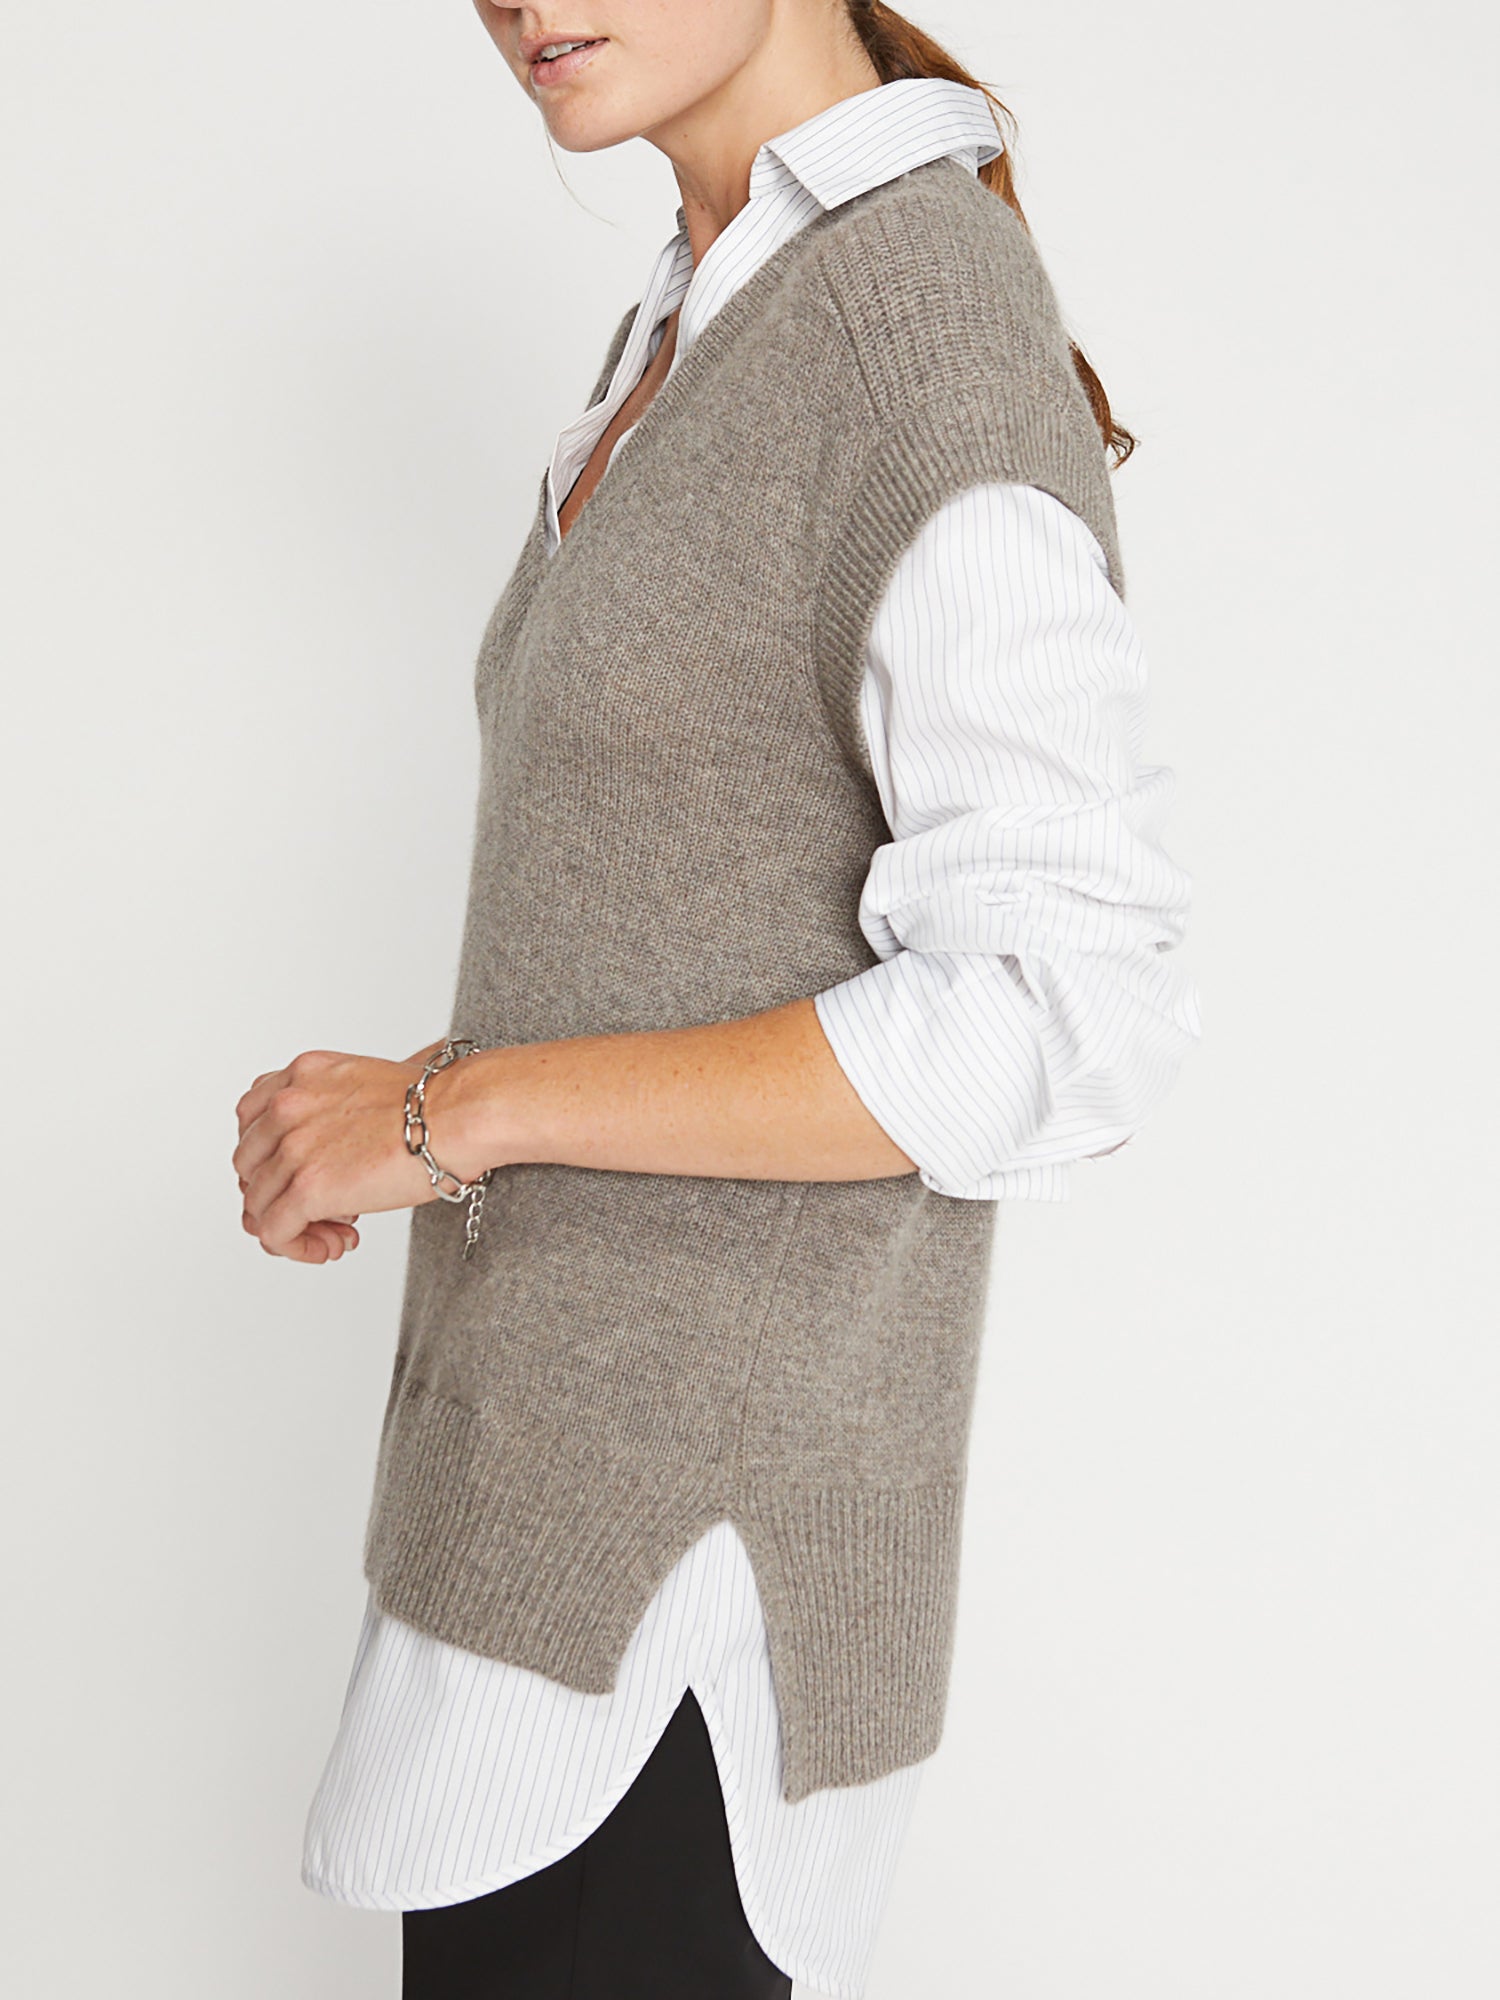 Nye grey v-neck vest with stripe shirt sleeves side view